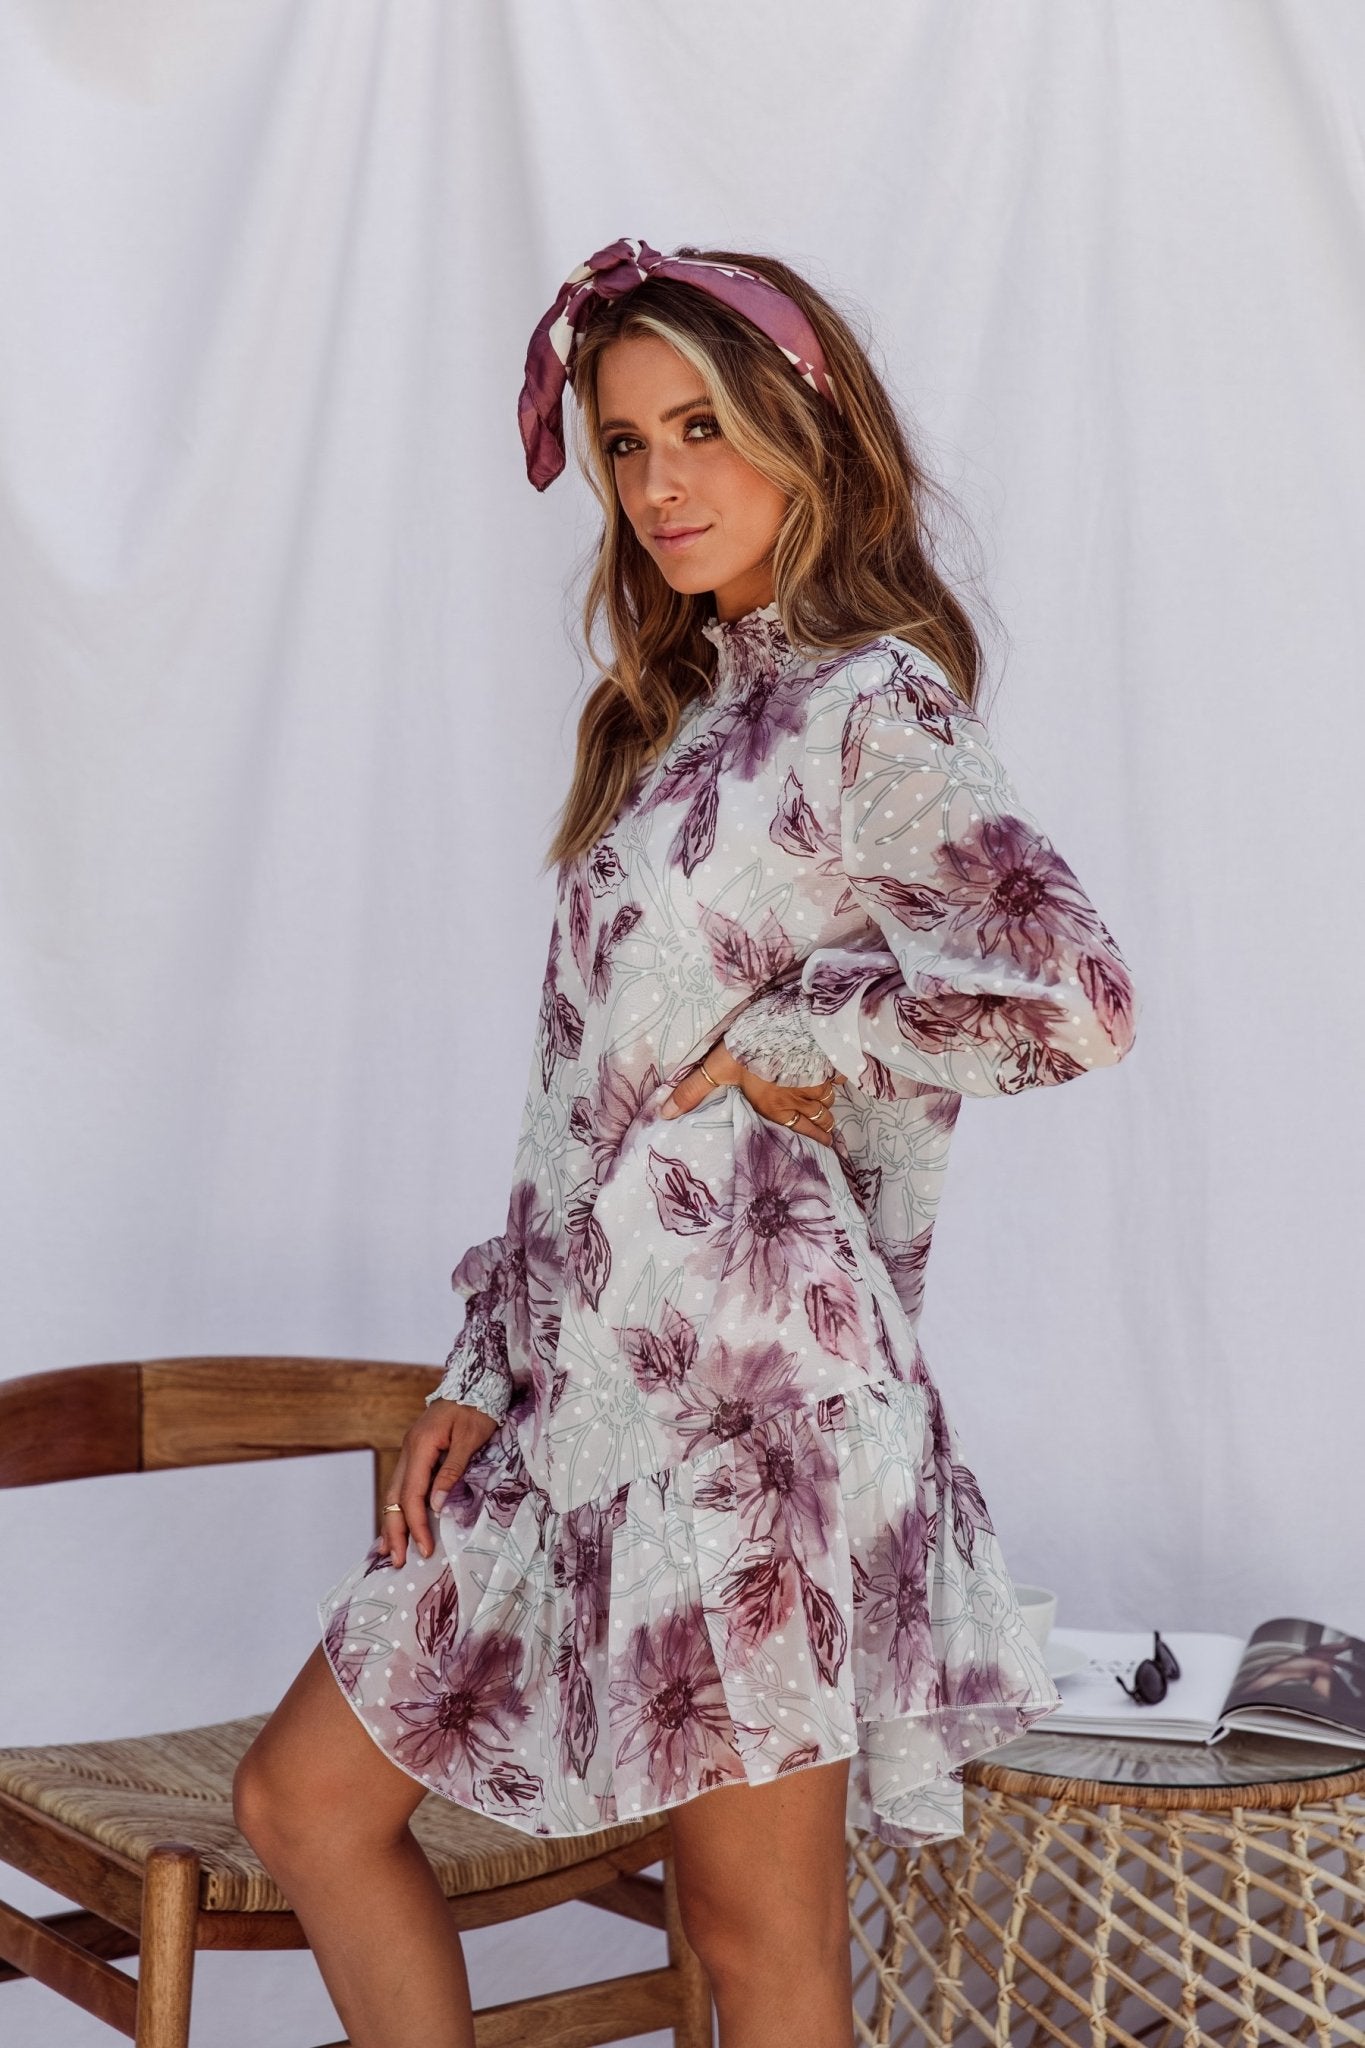 SNDYS Terri Dress in Floral Print - Hey Sara